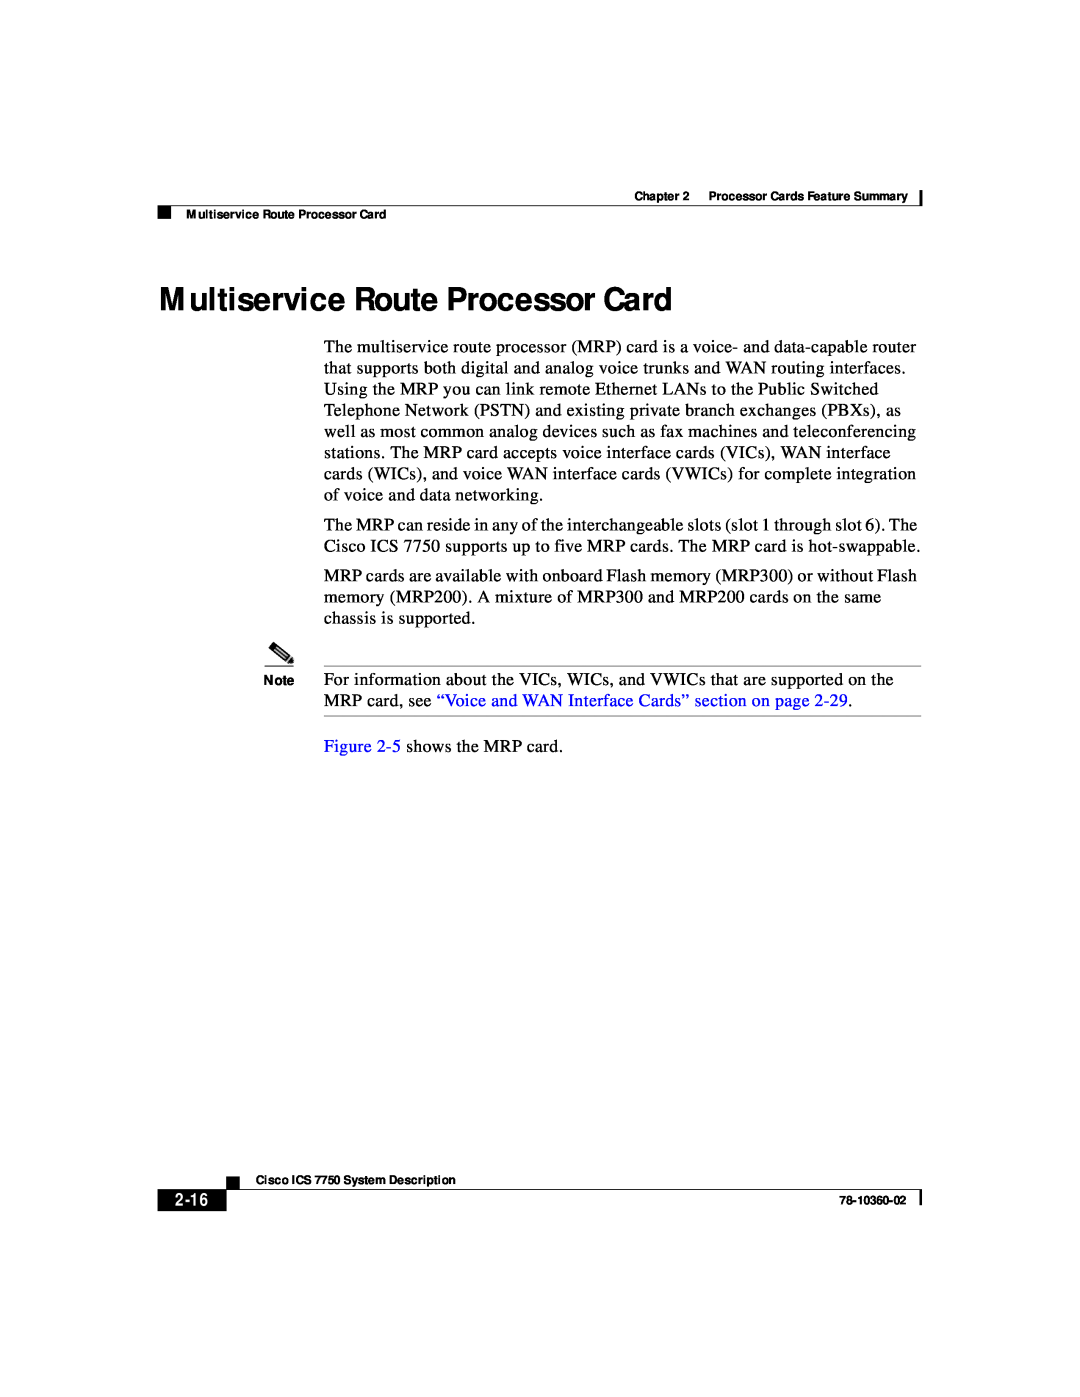 Cisco Systems ICS-7750 manual Multiservice Route Processor Card, 2-16 